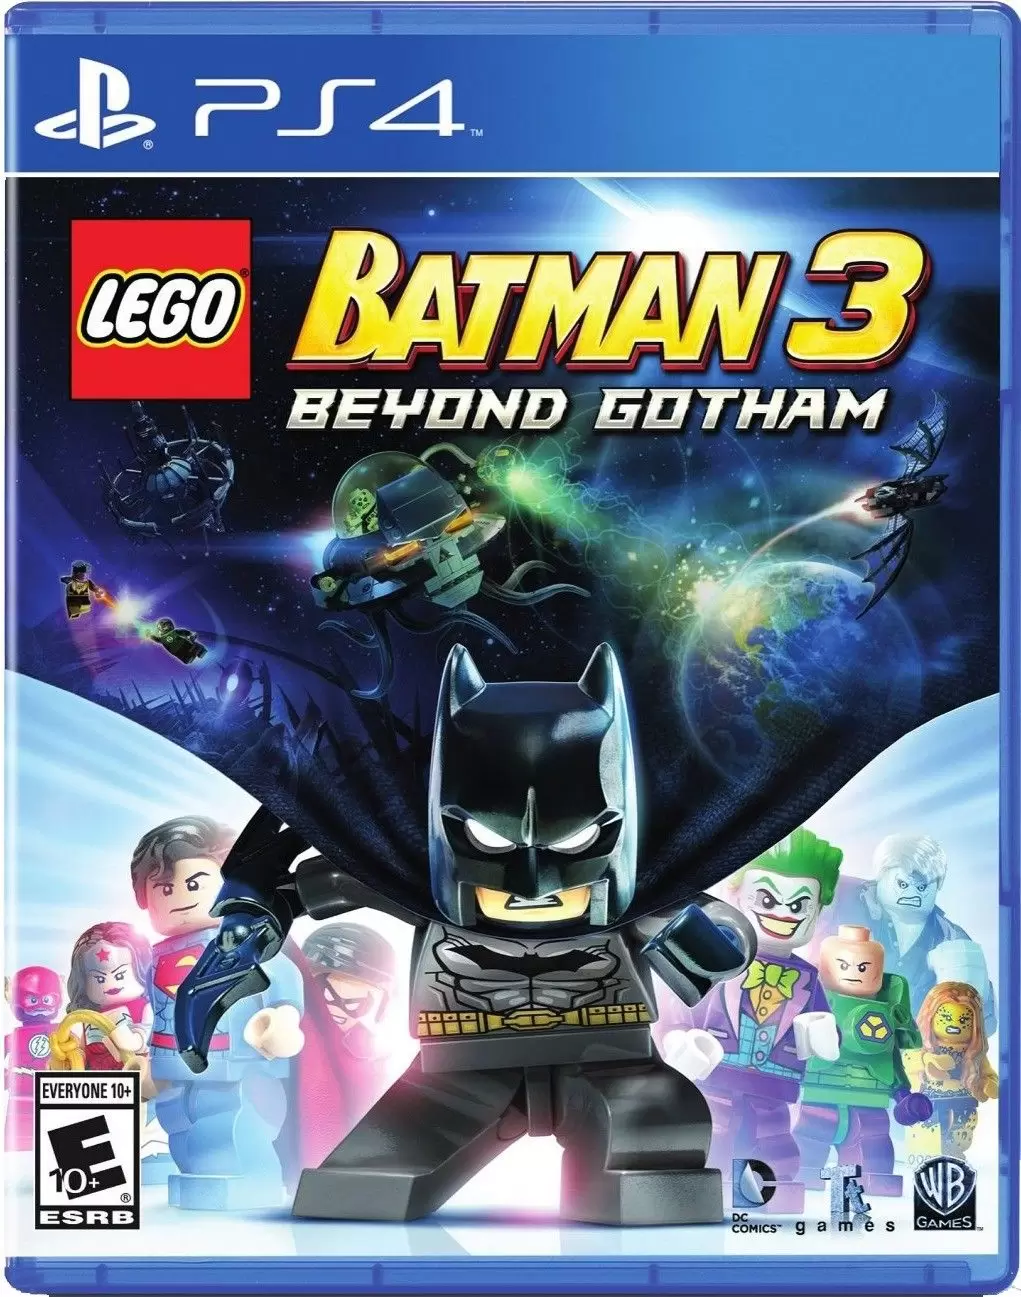 PS4 Games - LEGO Batman 3: Beyond Gotham